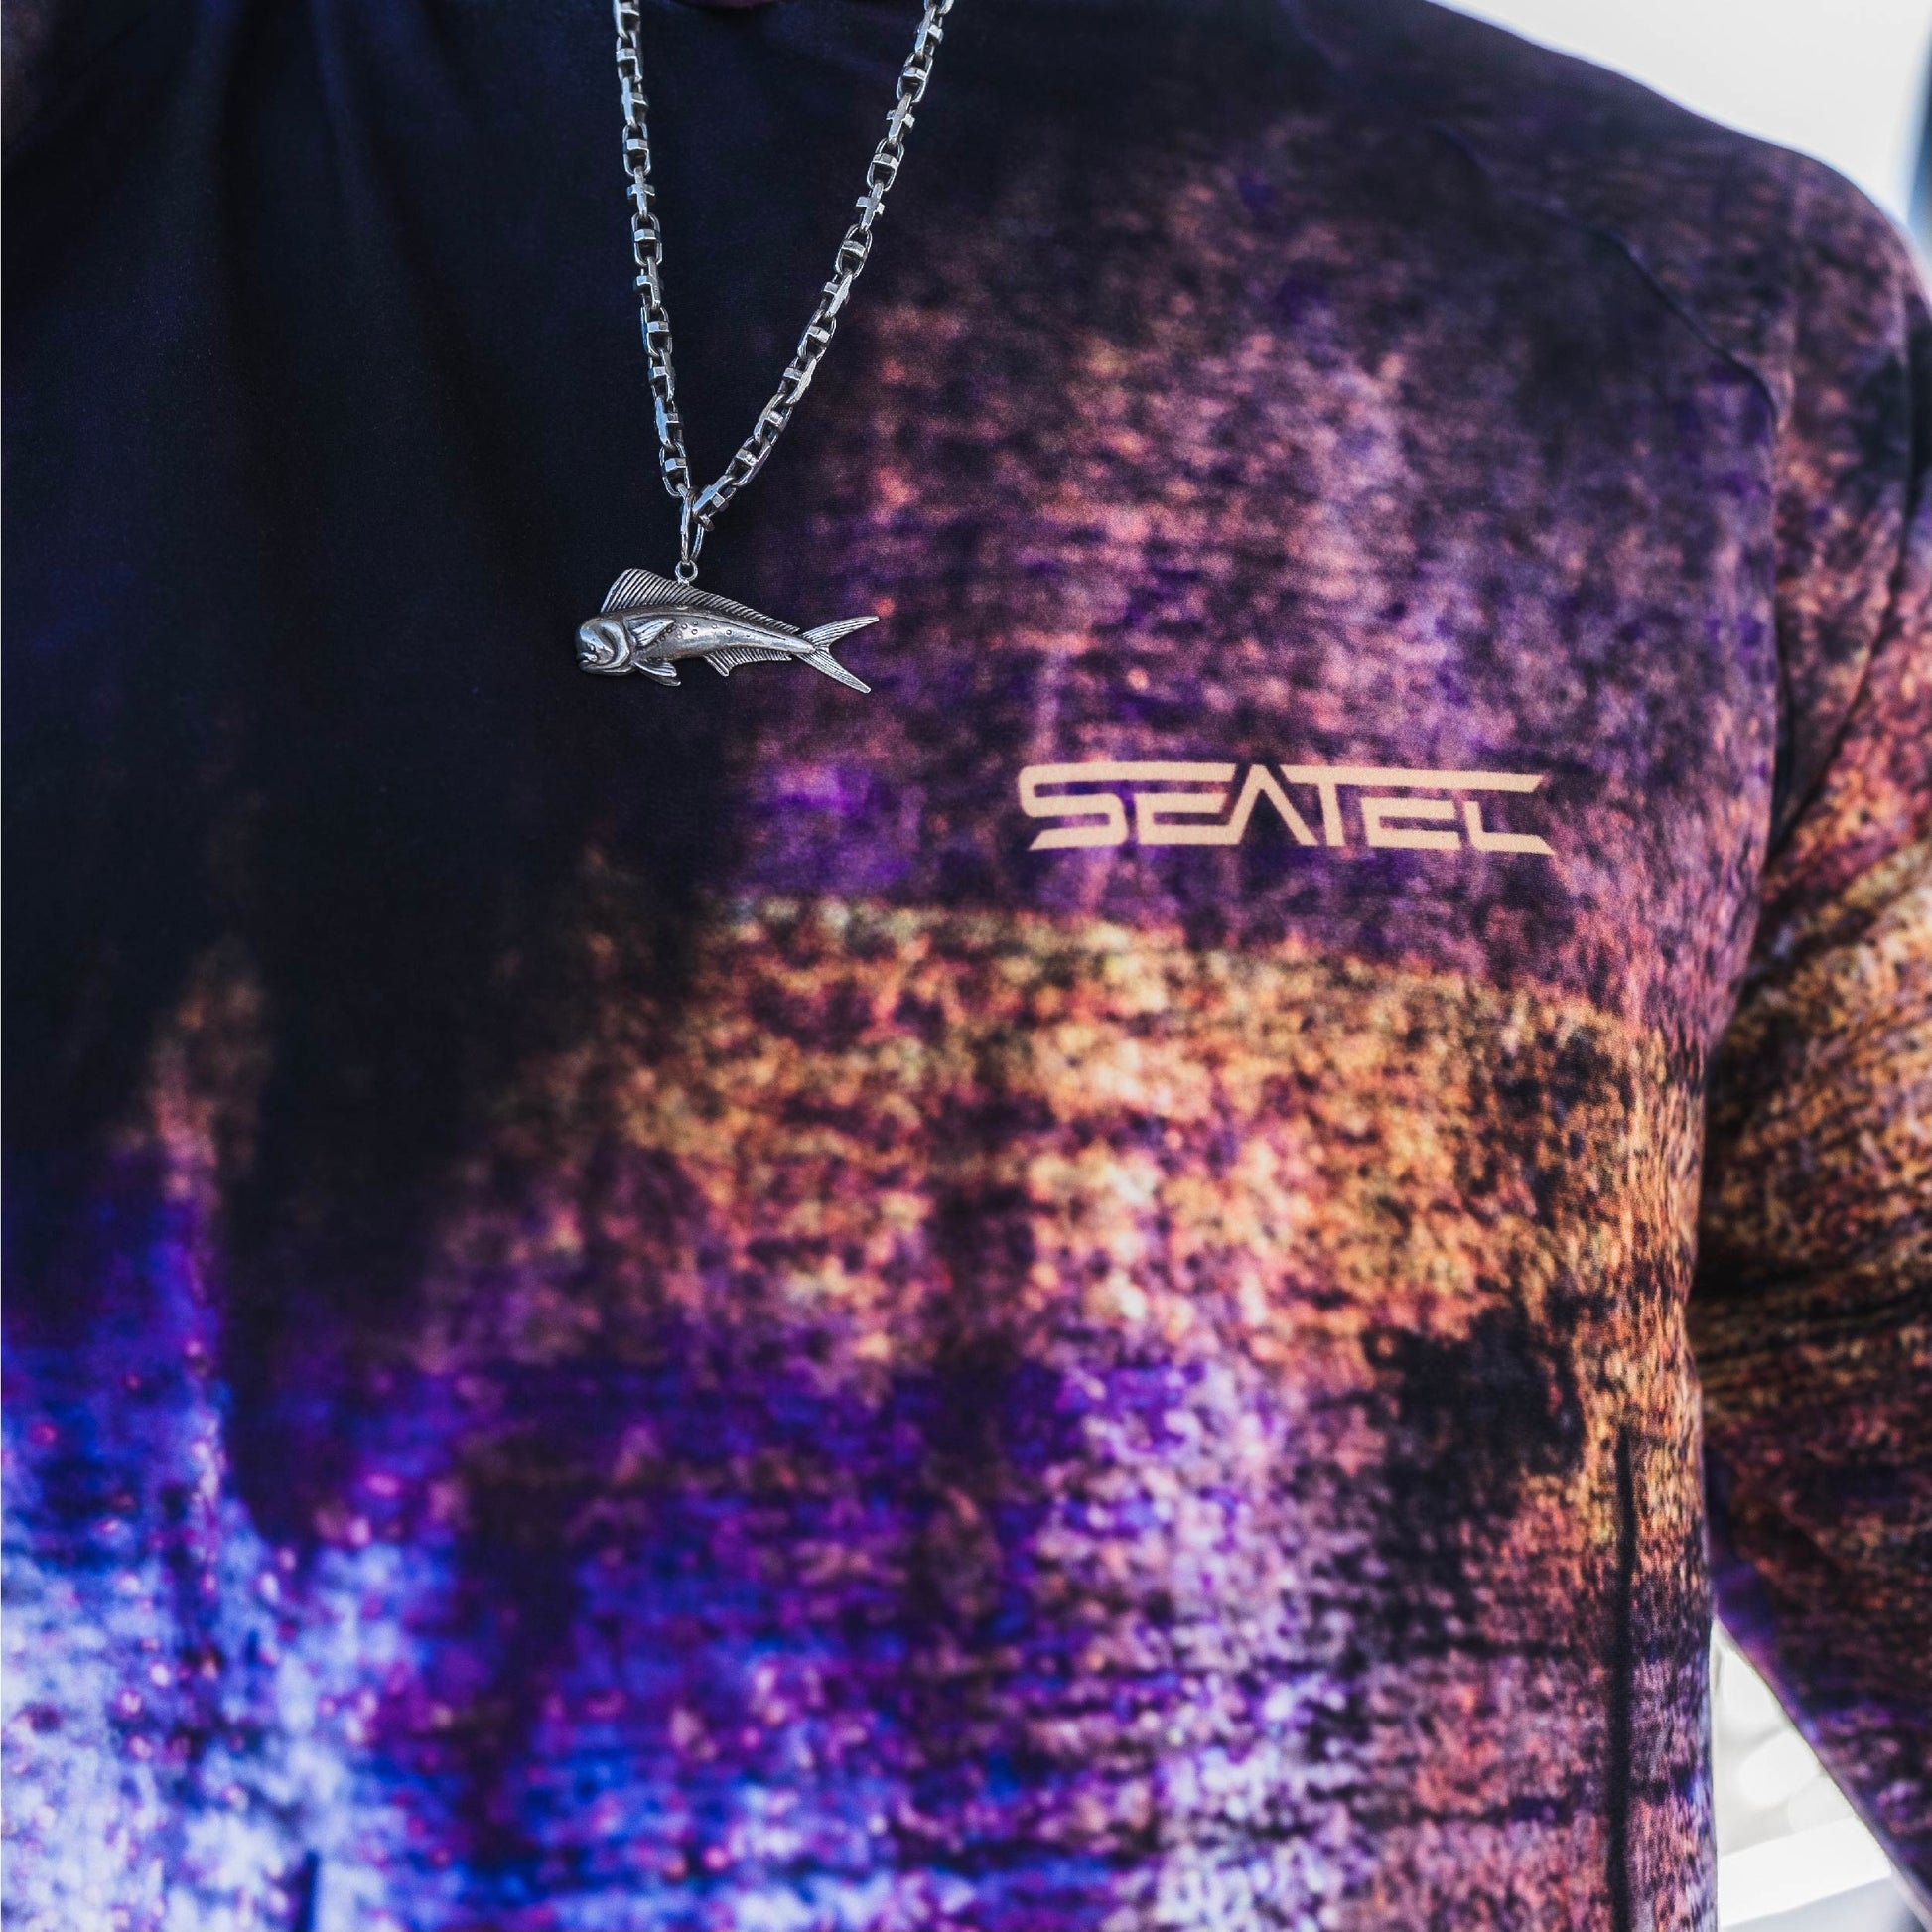 Pelagic Exo-Tech Hooded Sonar Long-Sleeve Fishing Shirt for Men